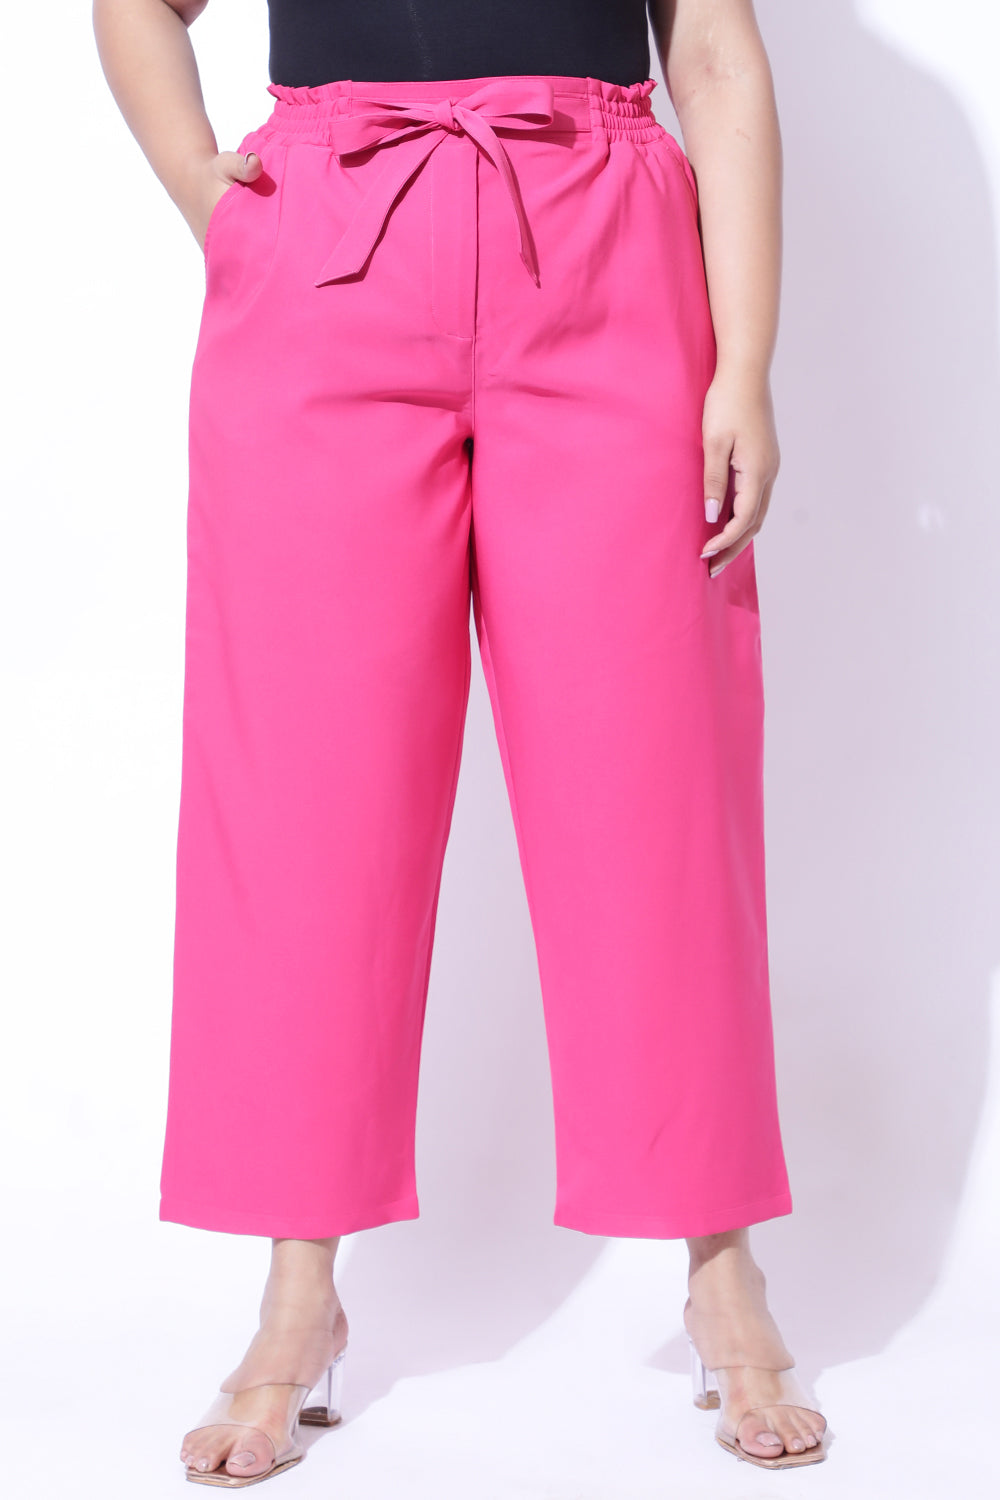 Plus Size Bright Pink Pants